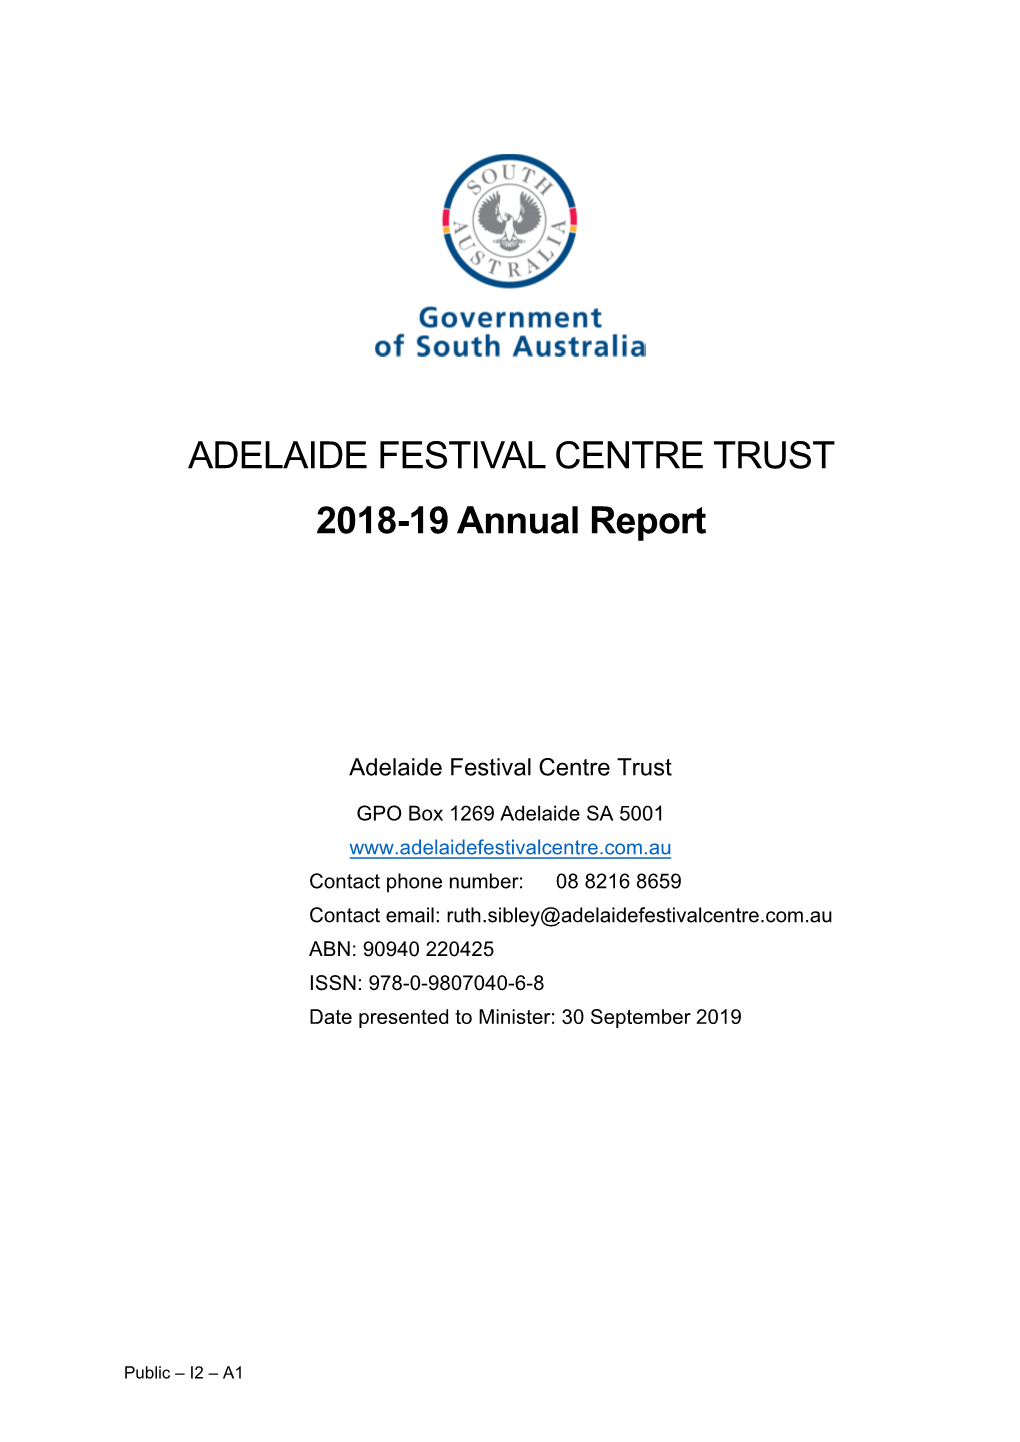 ADELAIDE FESTIVAL CENTRE TRUST 2018-19 Annual Report